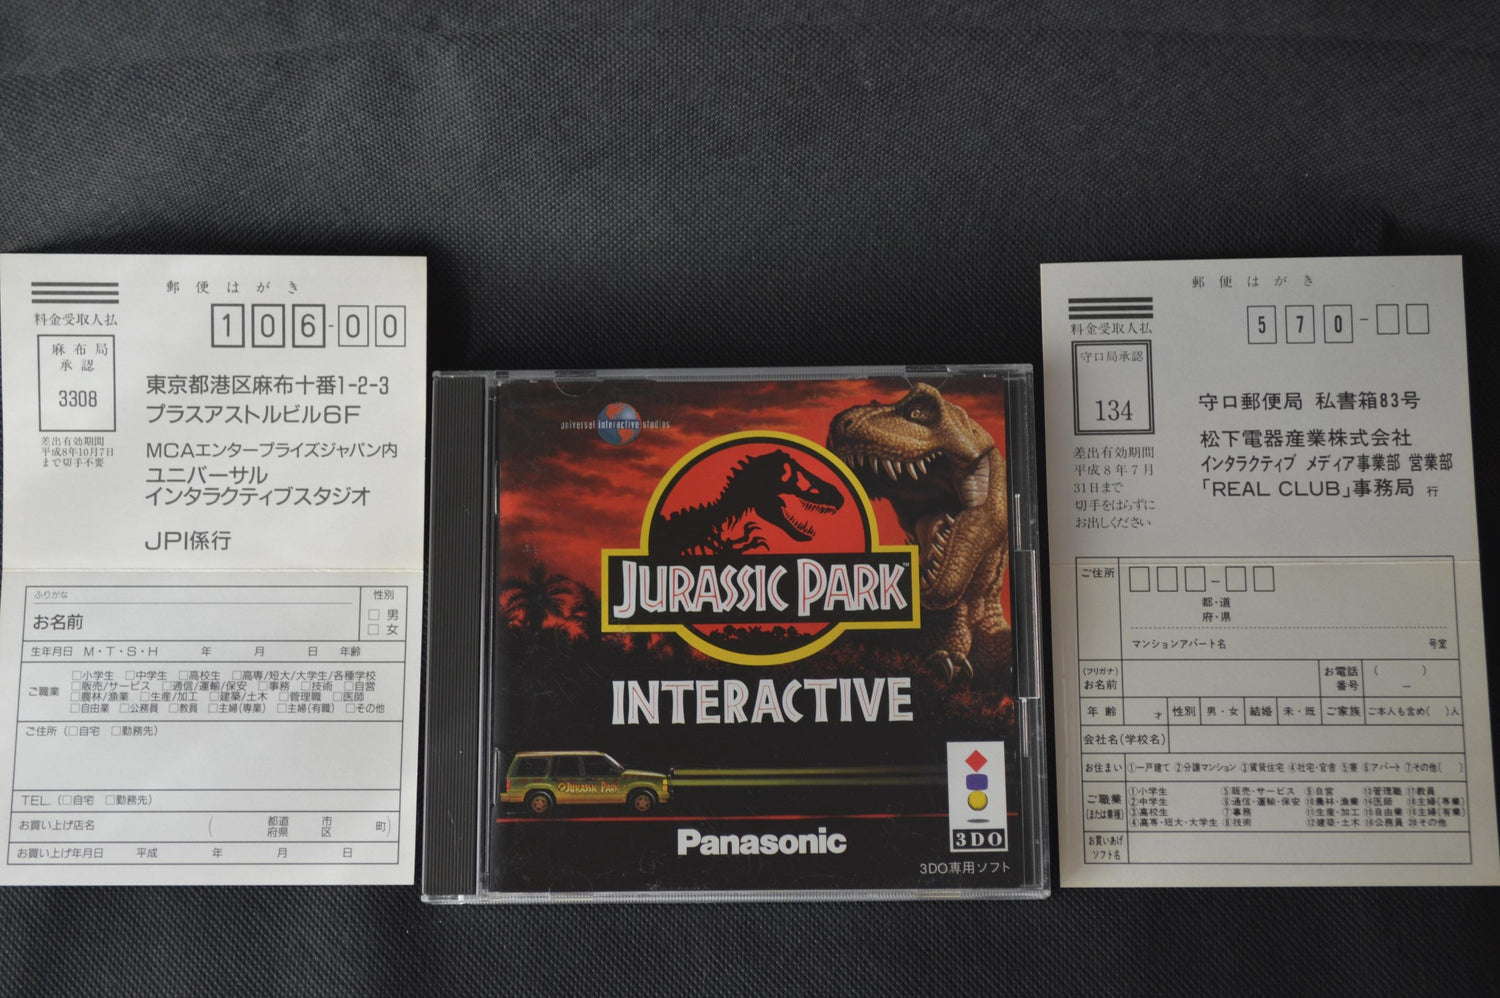 Jurassic Park Panasonic 3DO Real Game Disk, Manual, Box set-f1114 